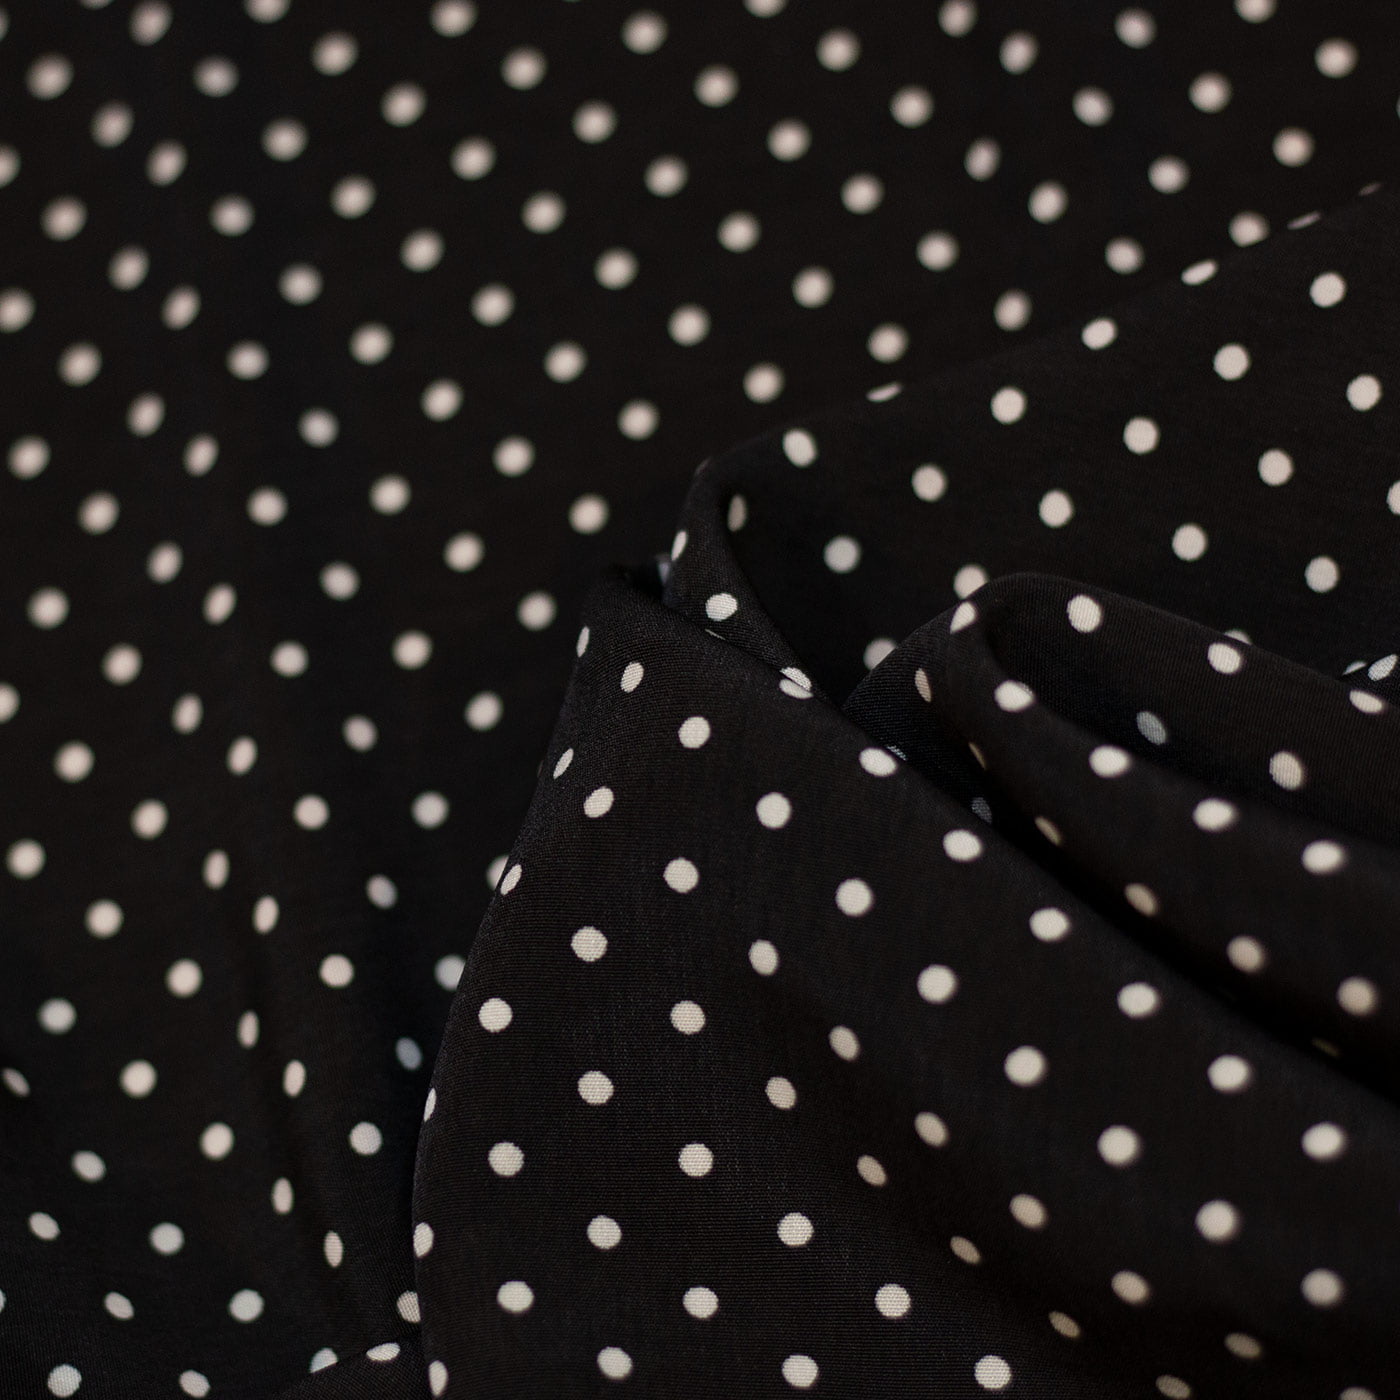 White Polka Dot Black Printed Chiffon Fabric